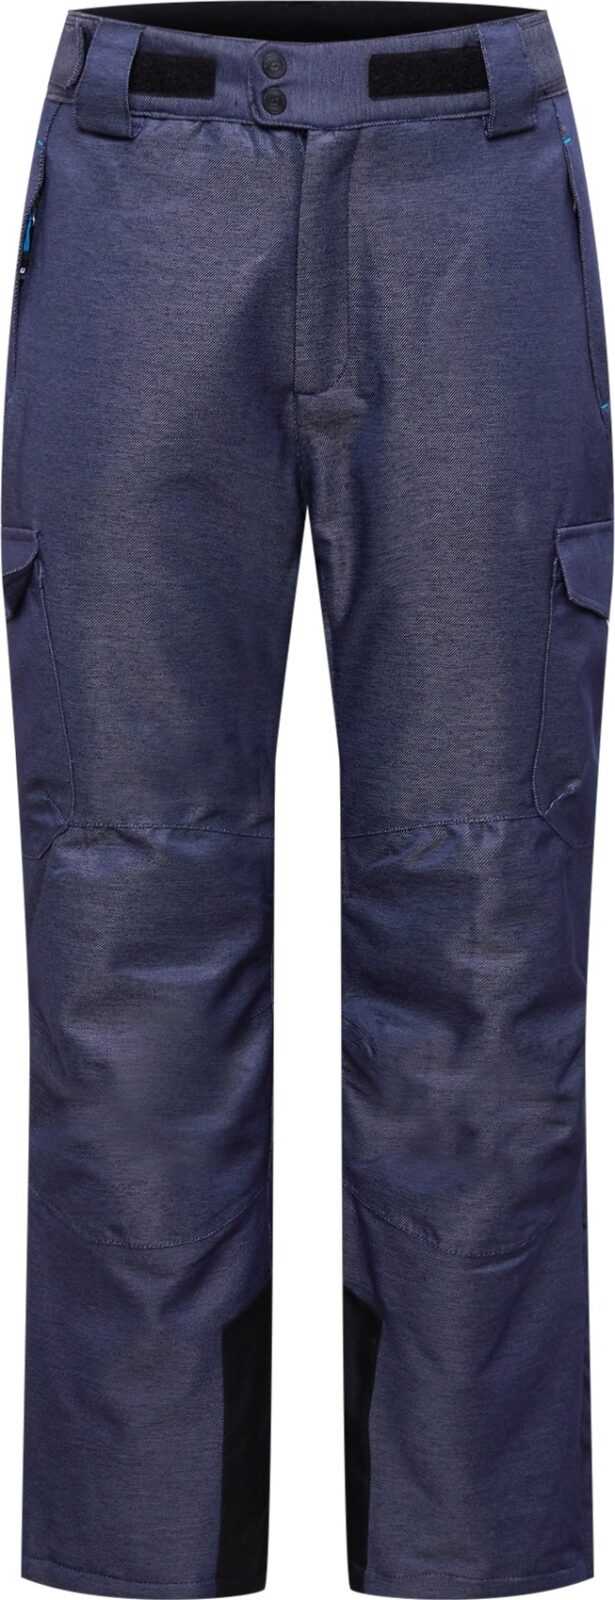 KILLTEC Outdoorové kalhoty 'Combloux' modrá